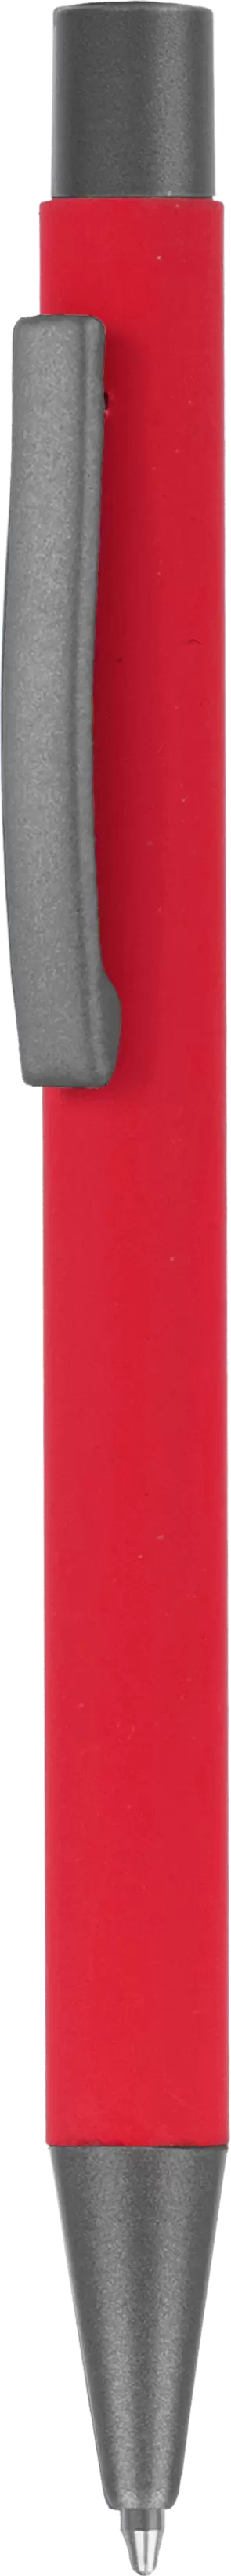 Ручка MAX SOFT TITAN Красная 1110-03